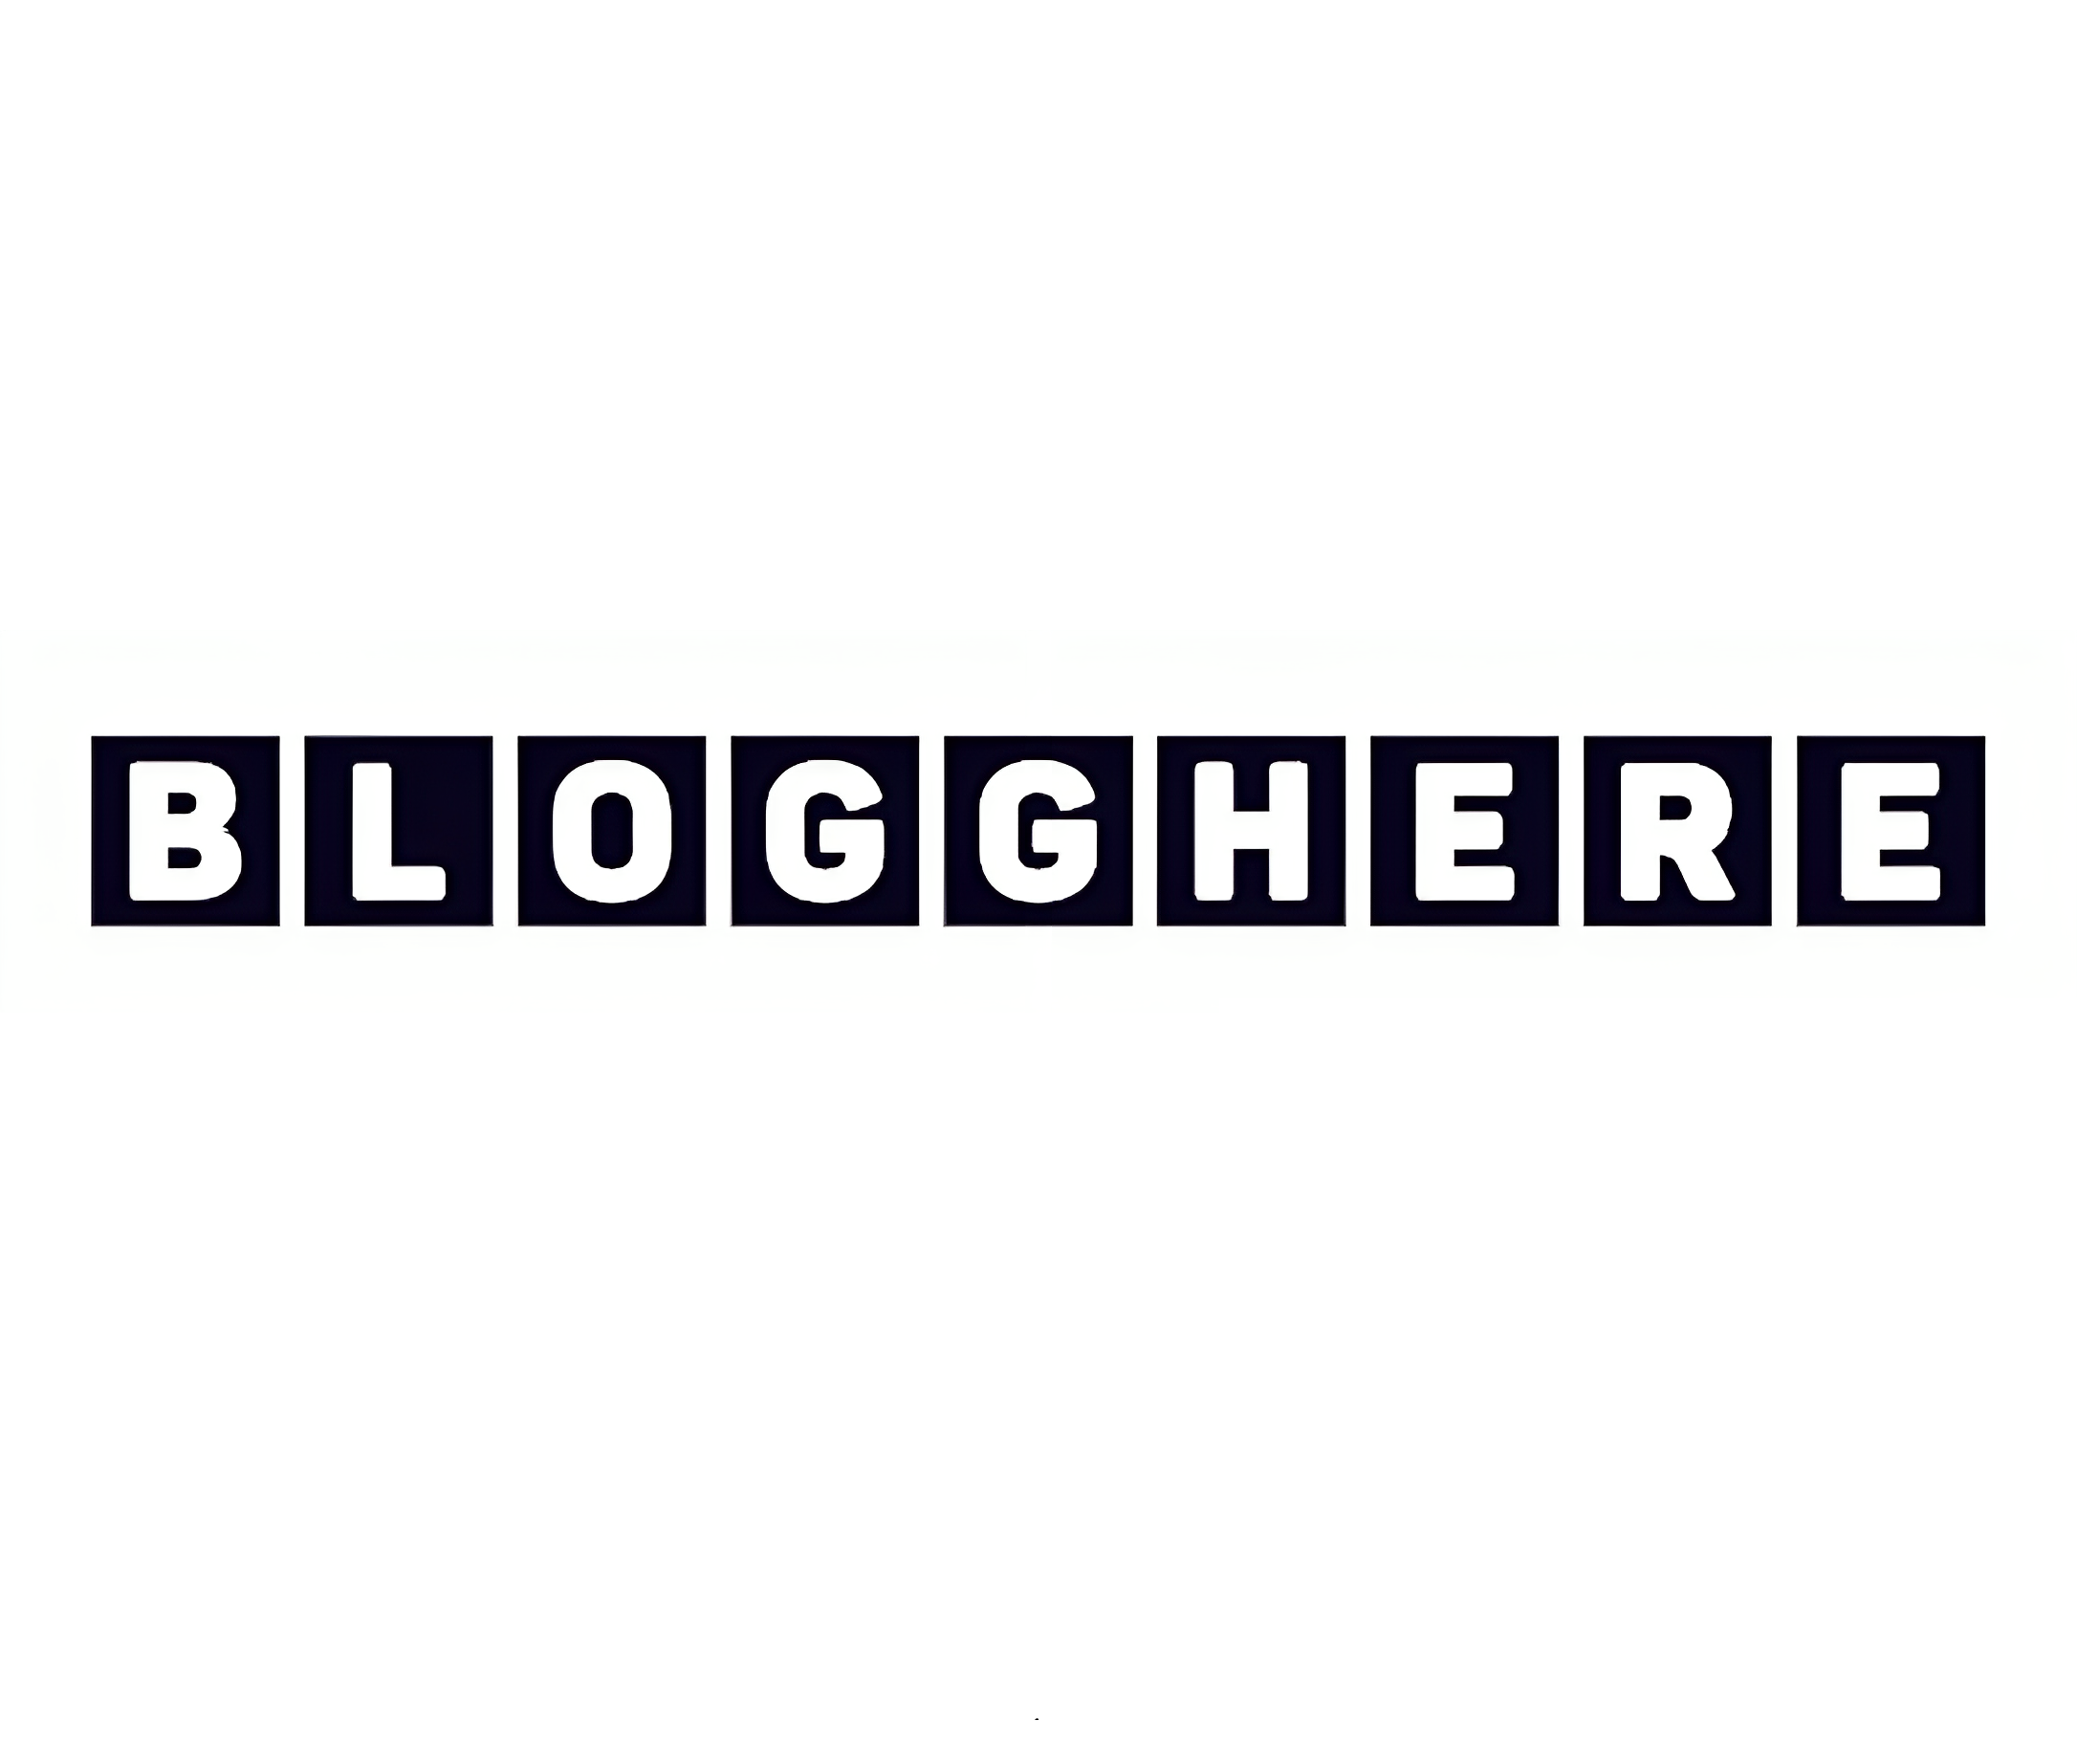 logo blogghere 1 ratio 1